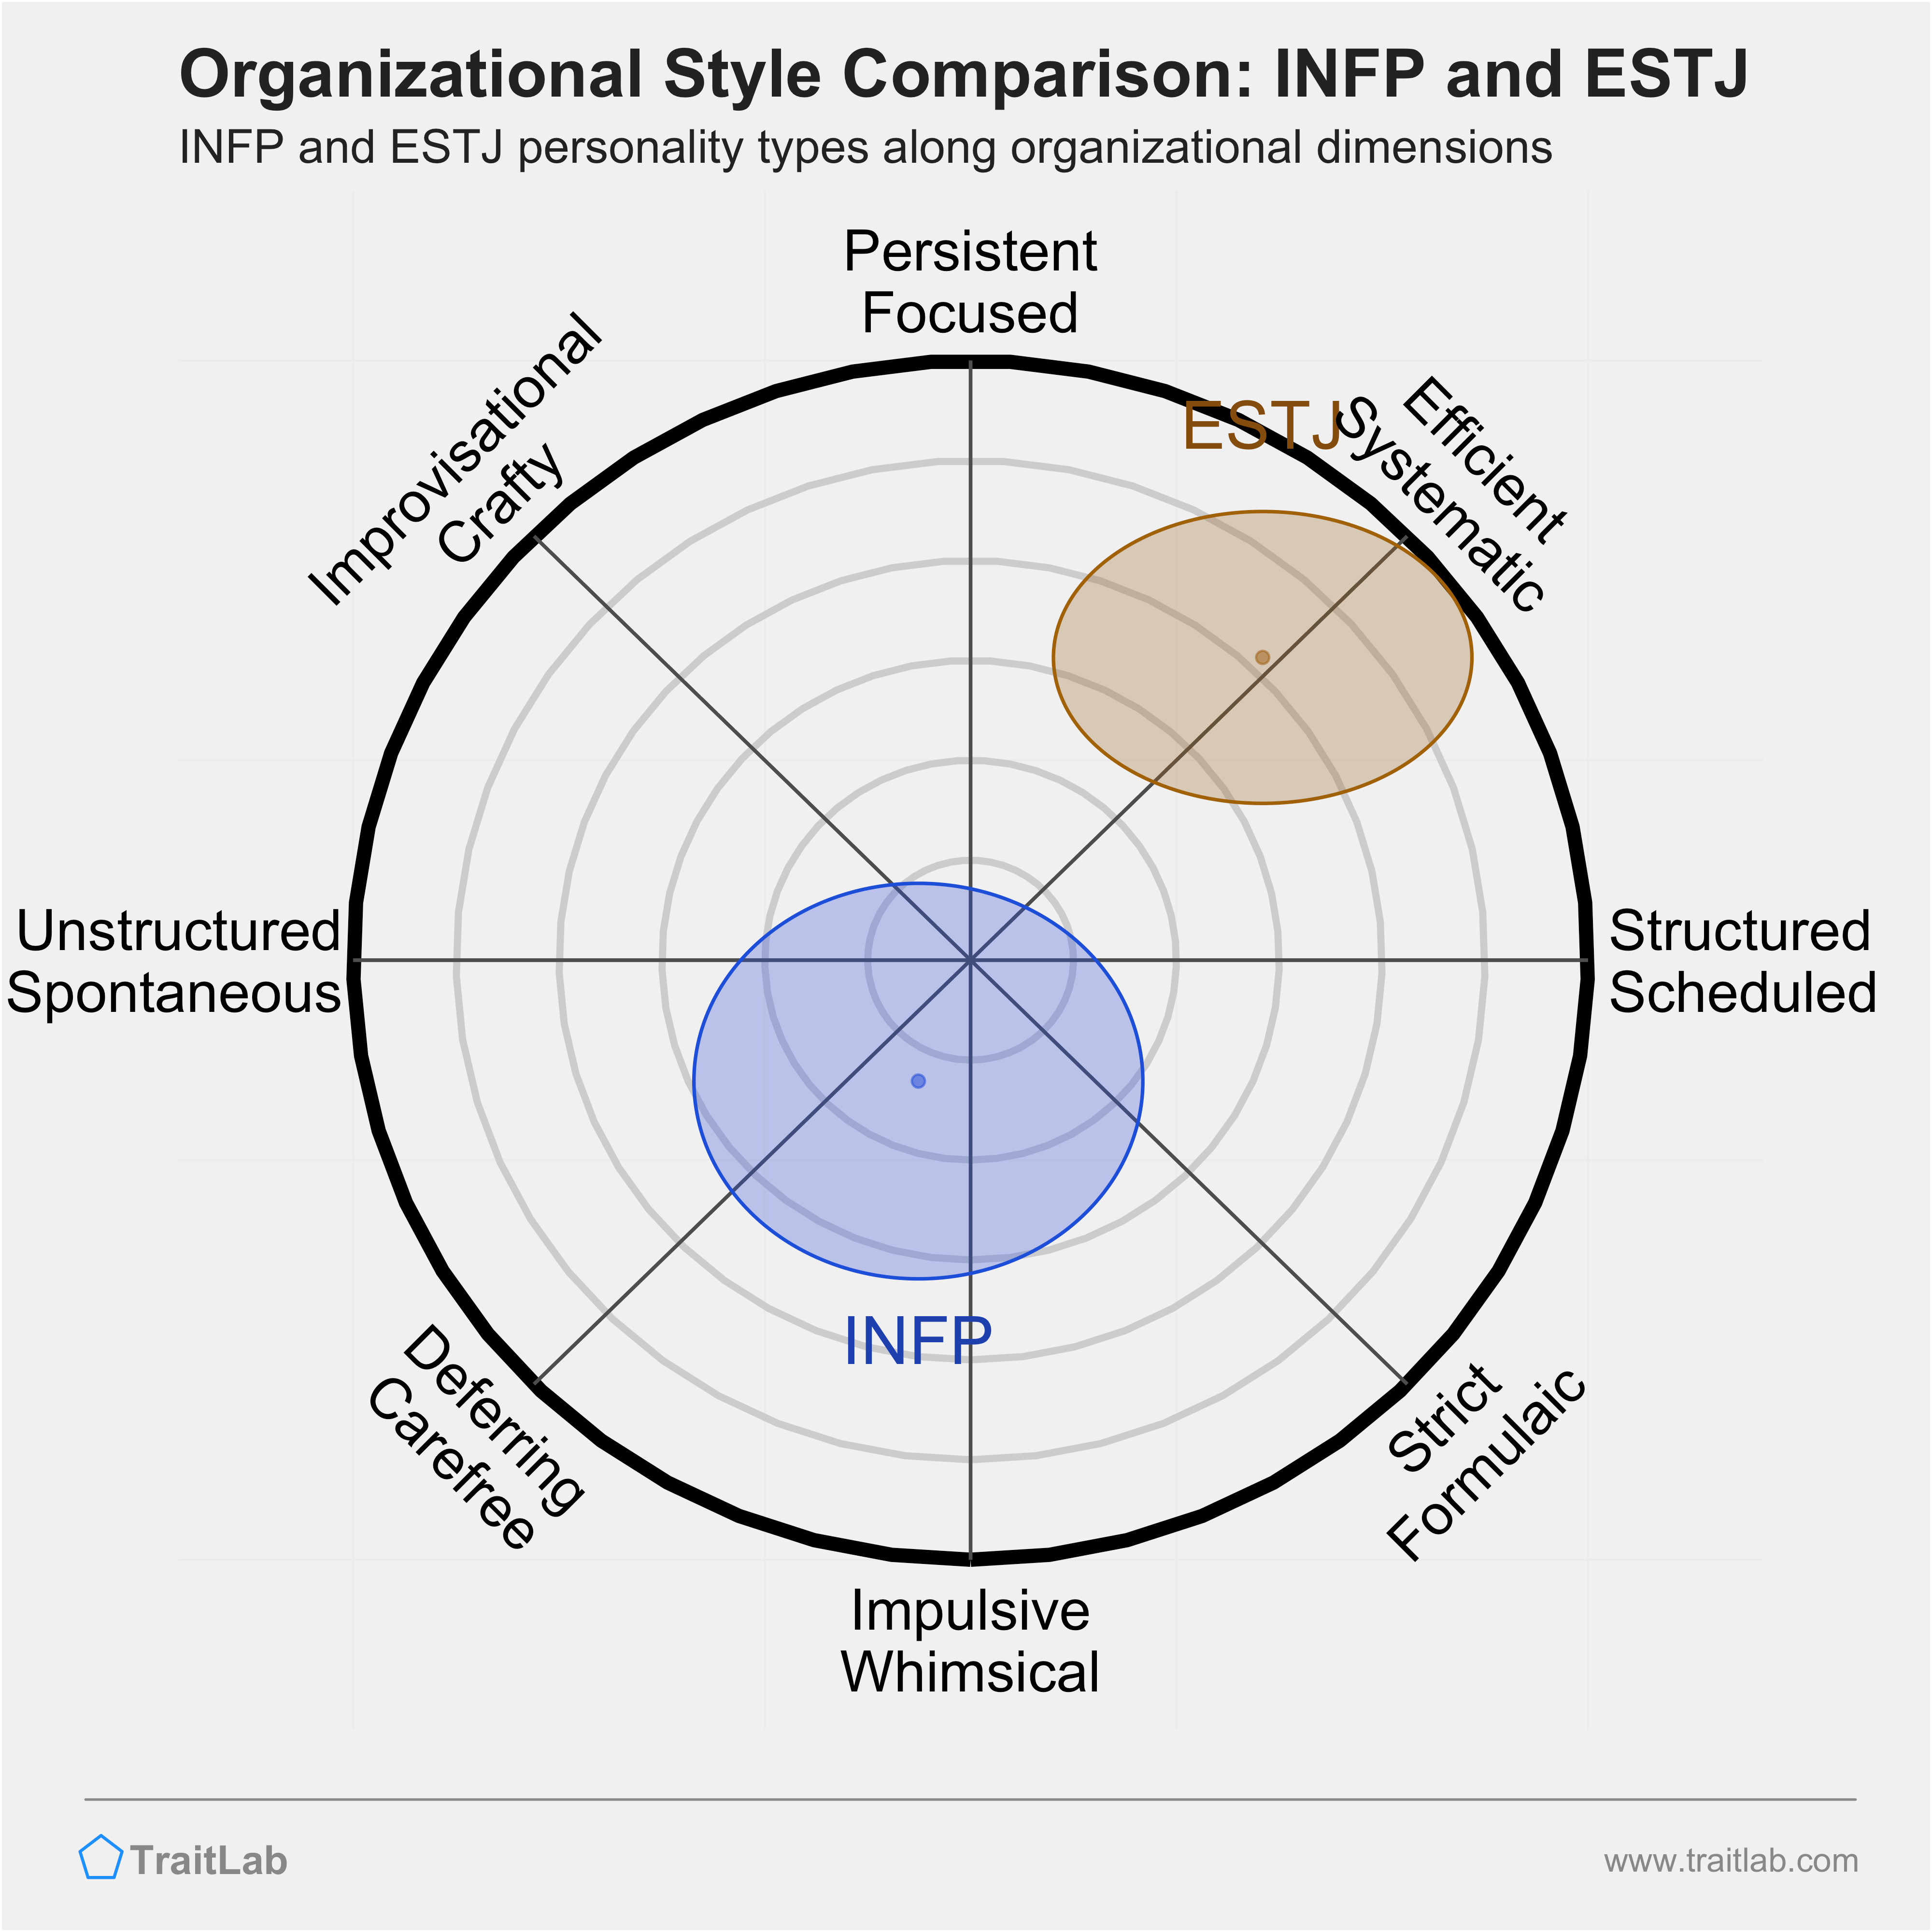 INFP and ESTJ comparison across organizational dimensions